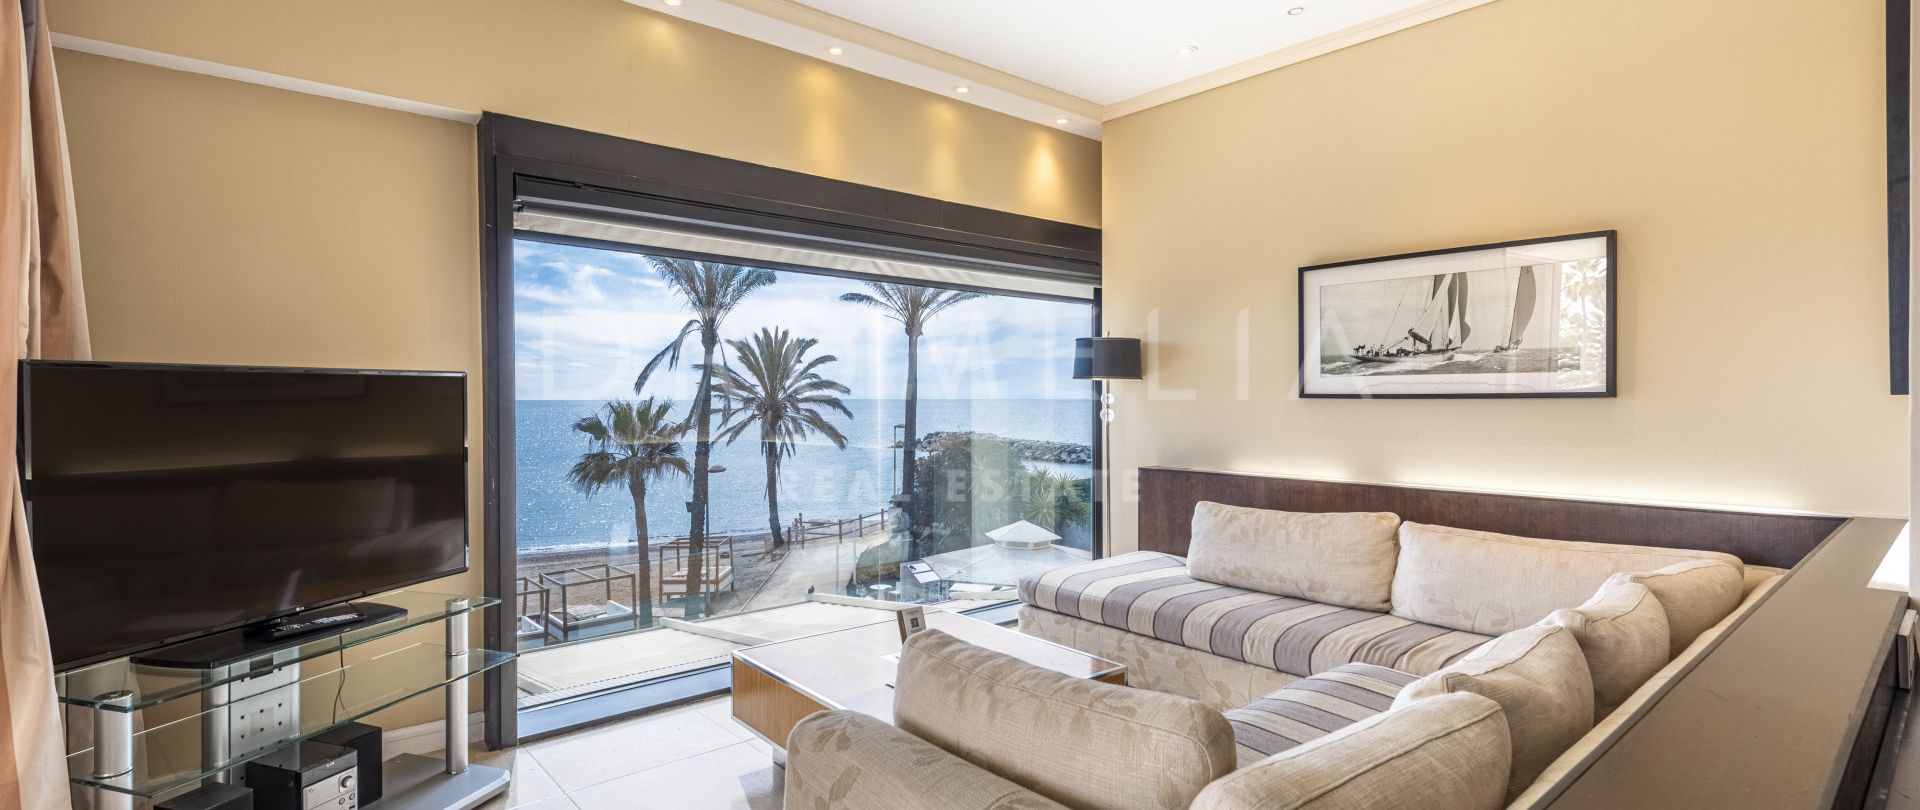 Appartement de luxe en bord de mer avec vue imprenable sur la mer à Guadalpin Banus, Marbella